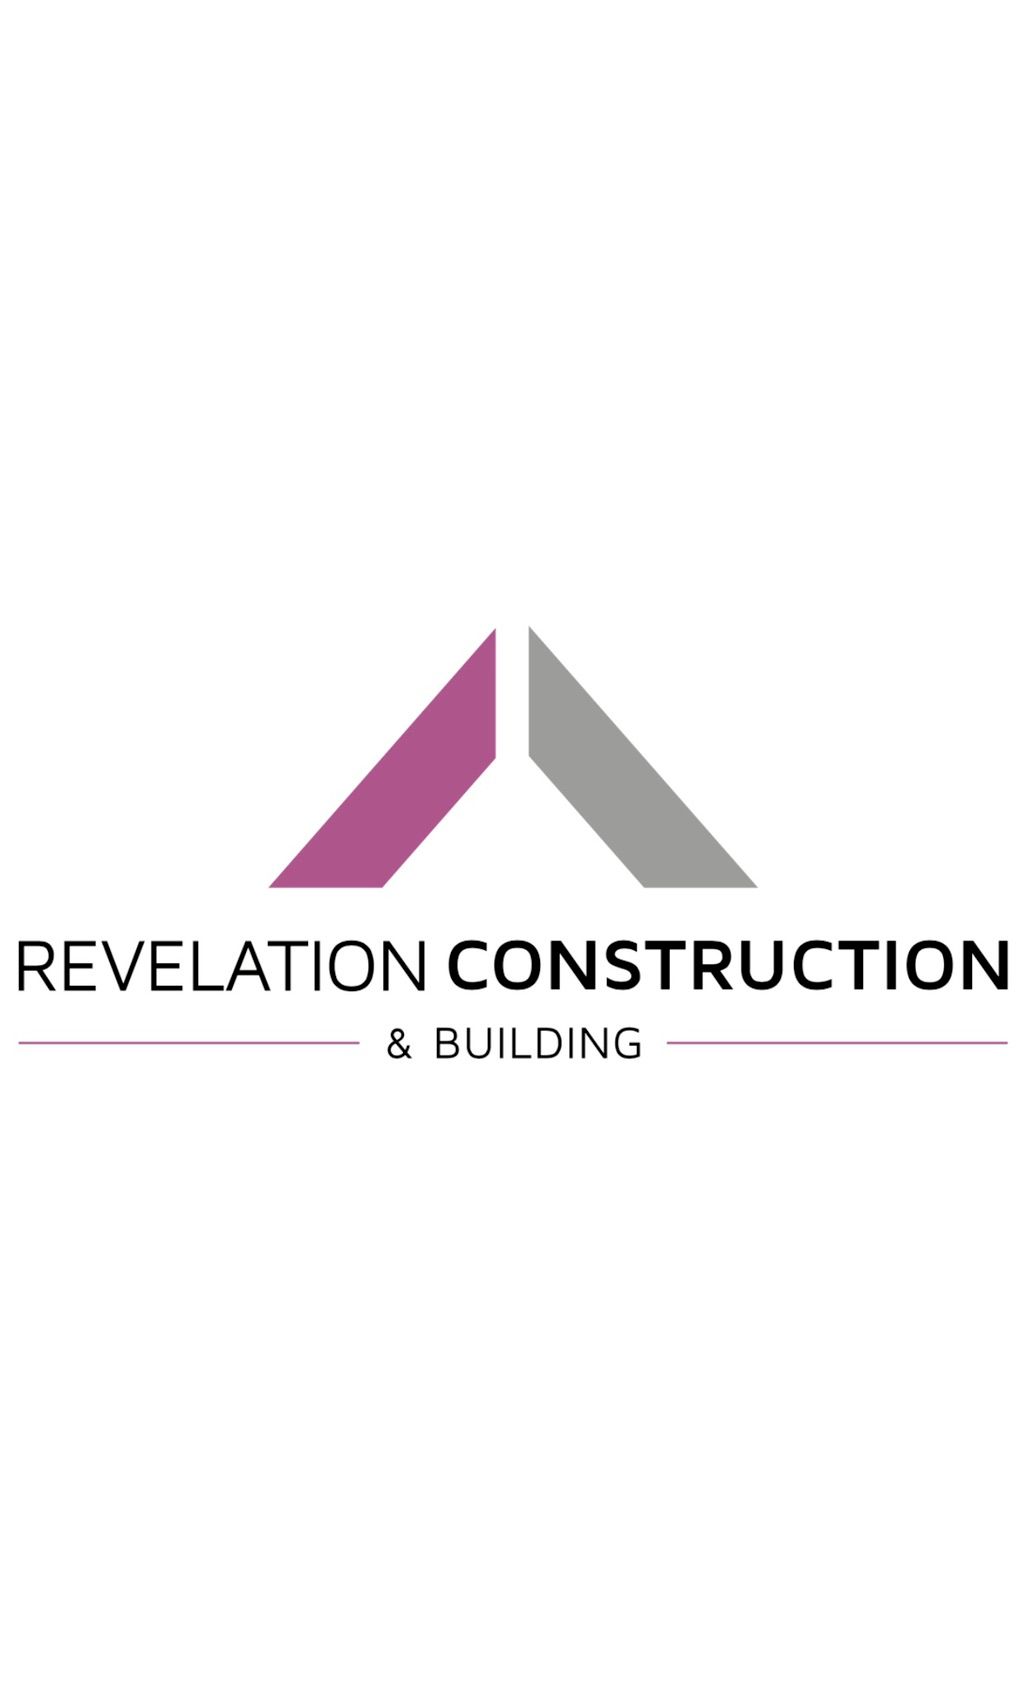 Revelation Construction & Building